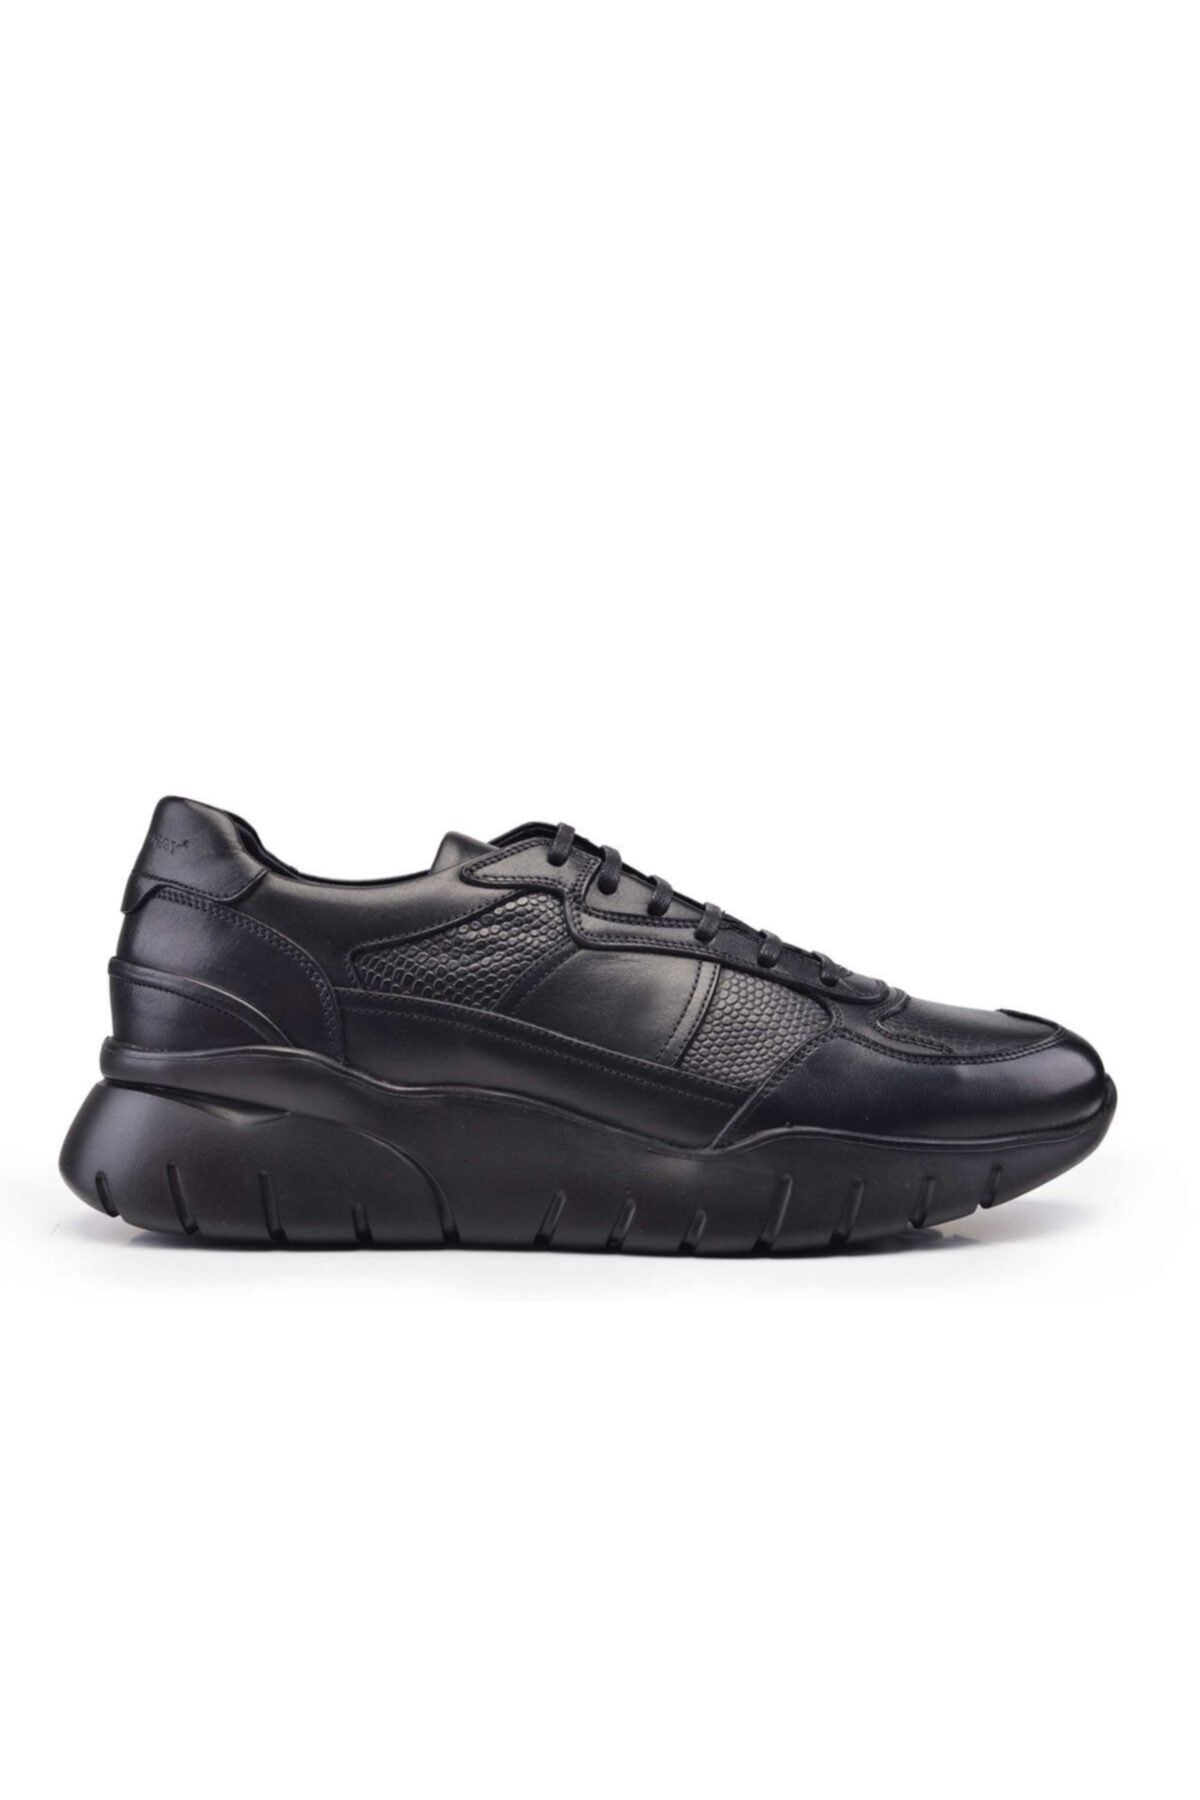 Nevzat Onay Hakiki Deri Siyah Sneaker Erkek Ayakkabı -11008-